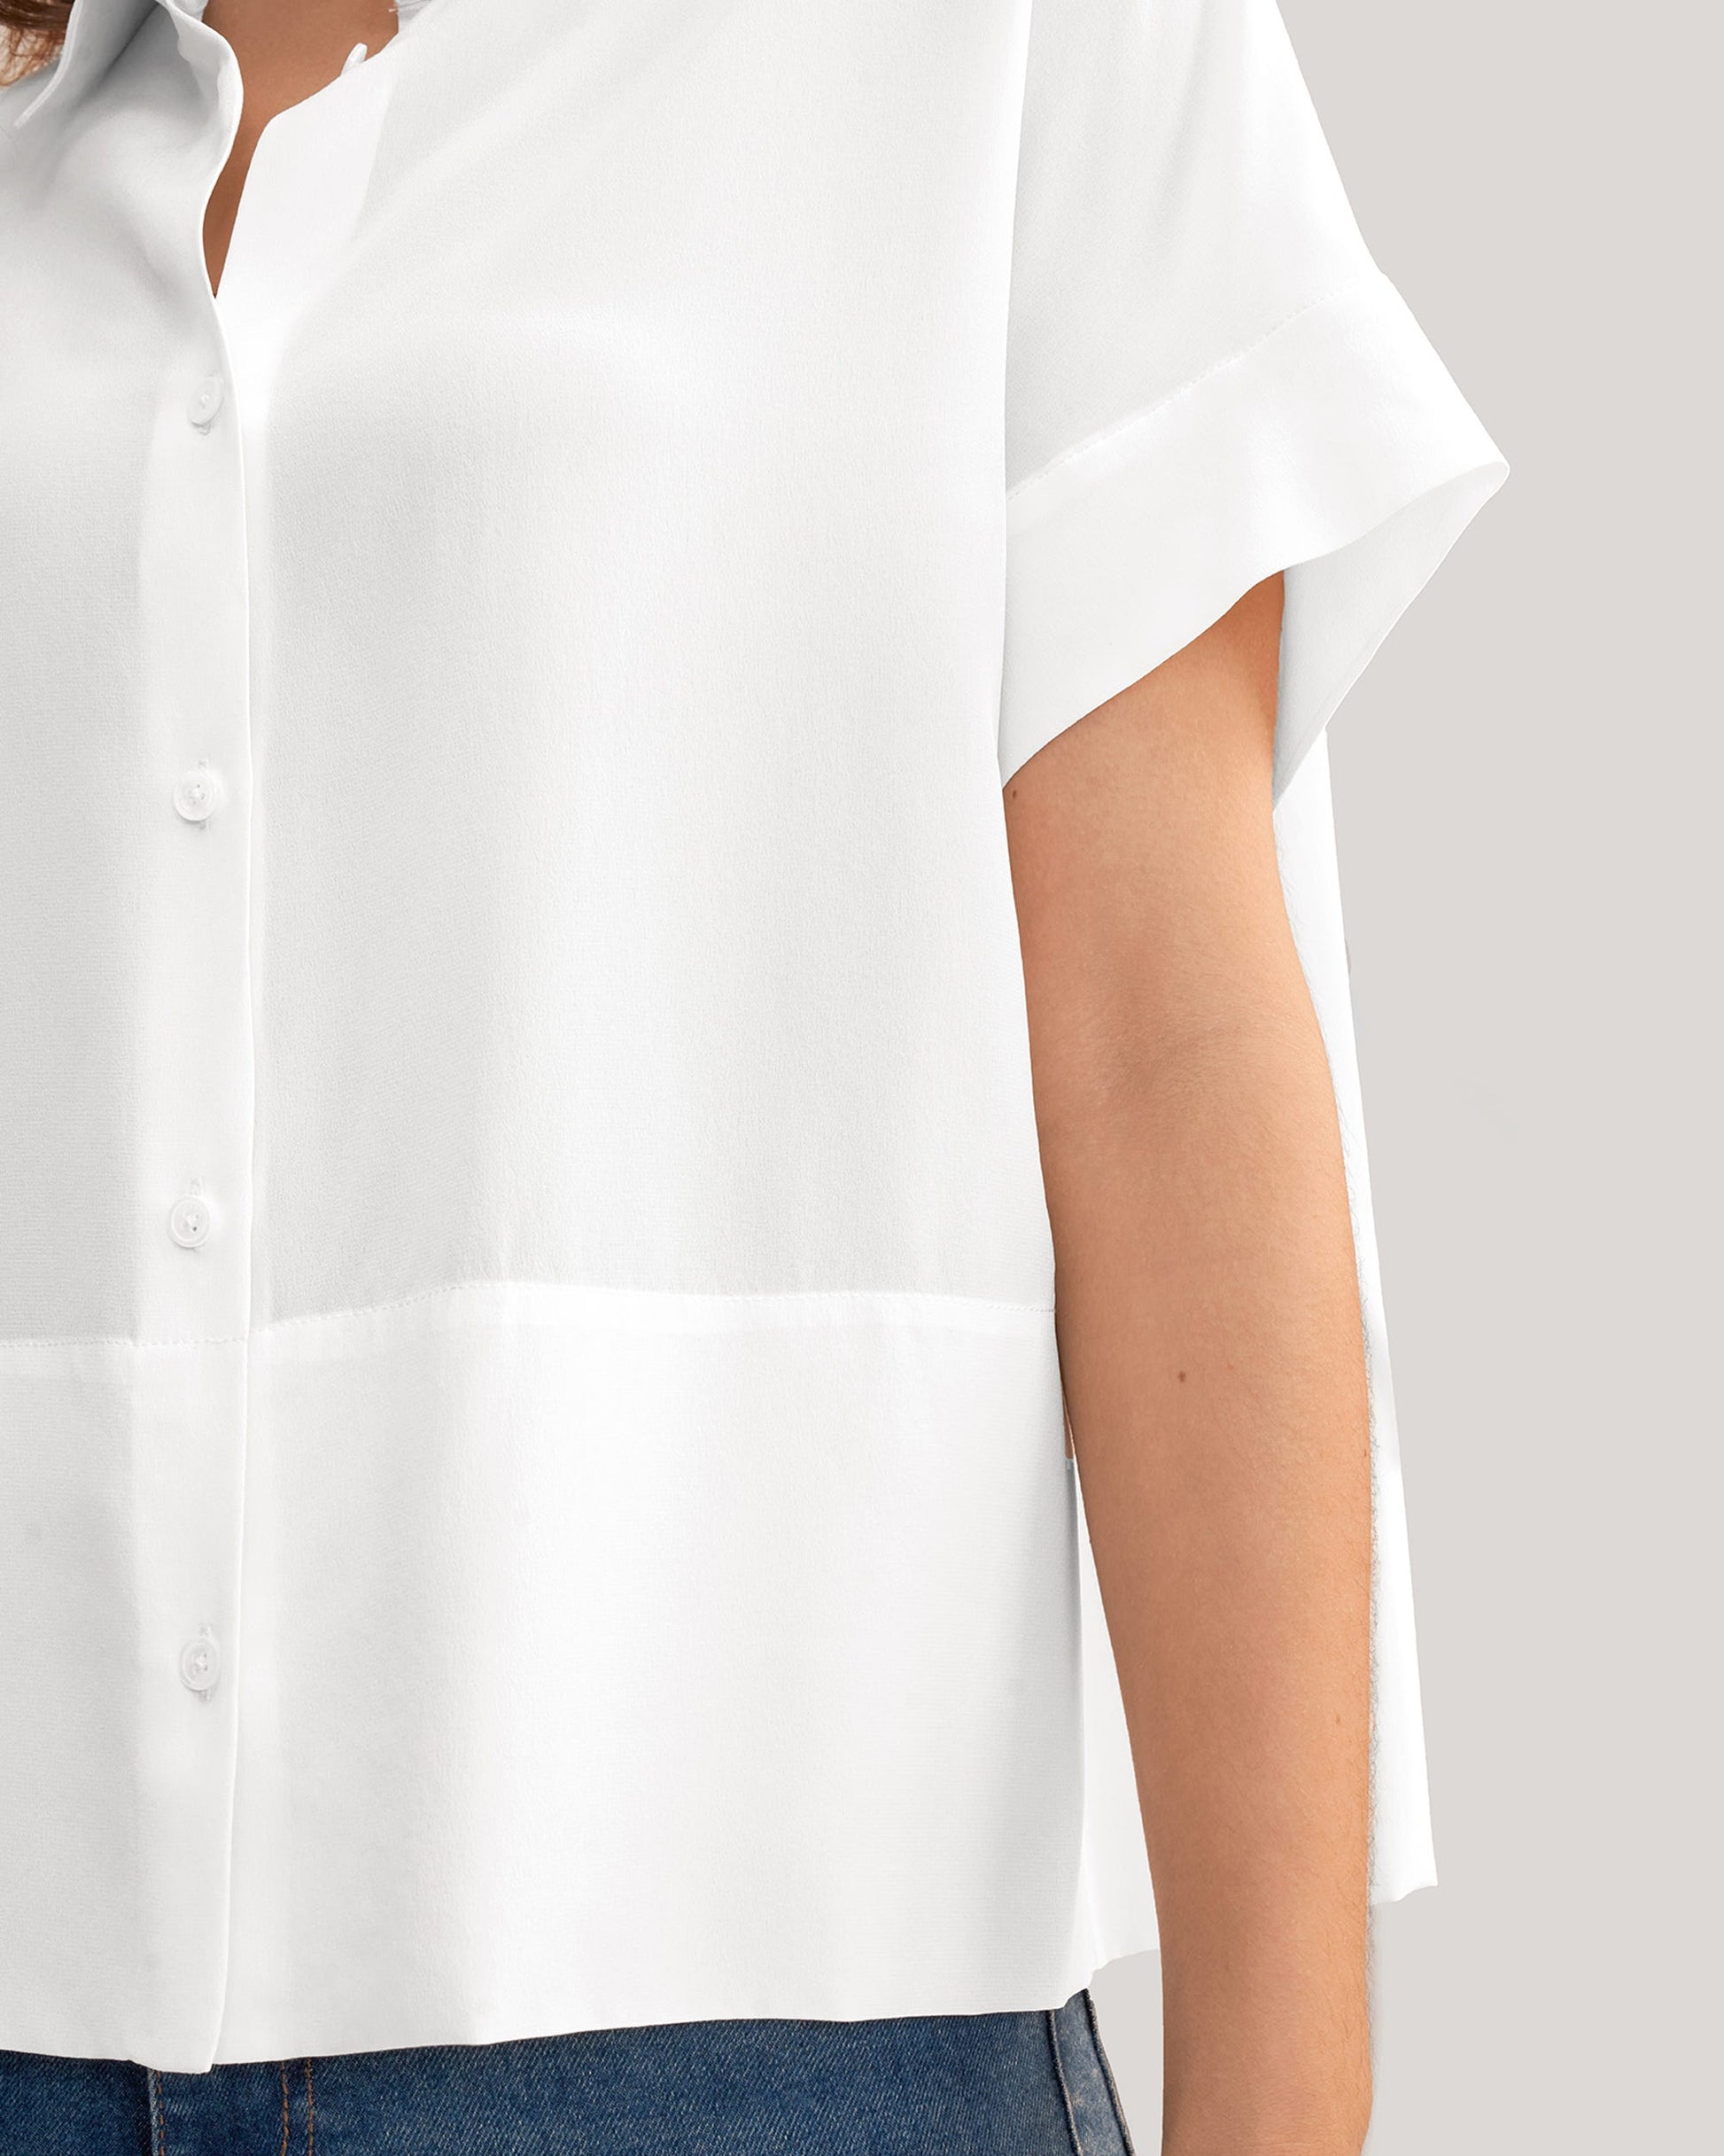 LILYSILK Casual Short Sleeves Loose Silk Shirt for Women - Navy Blue